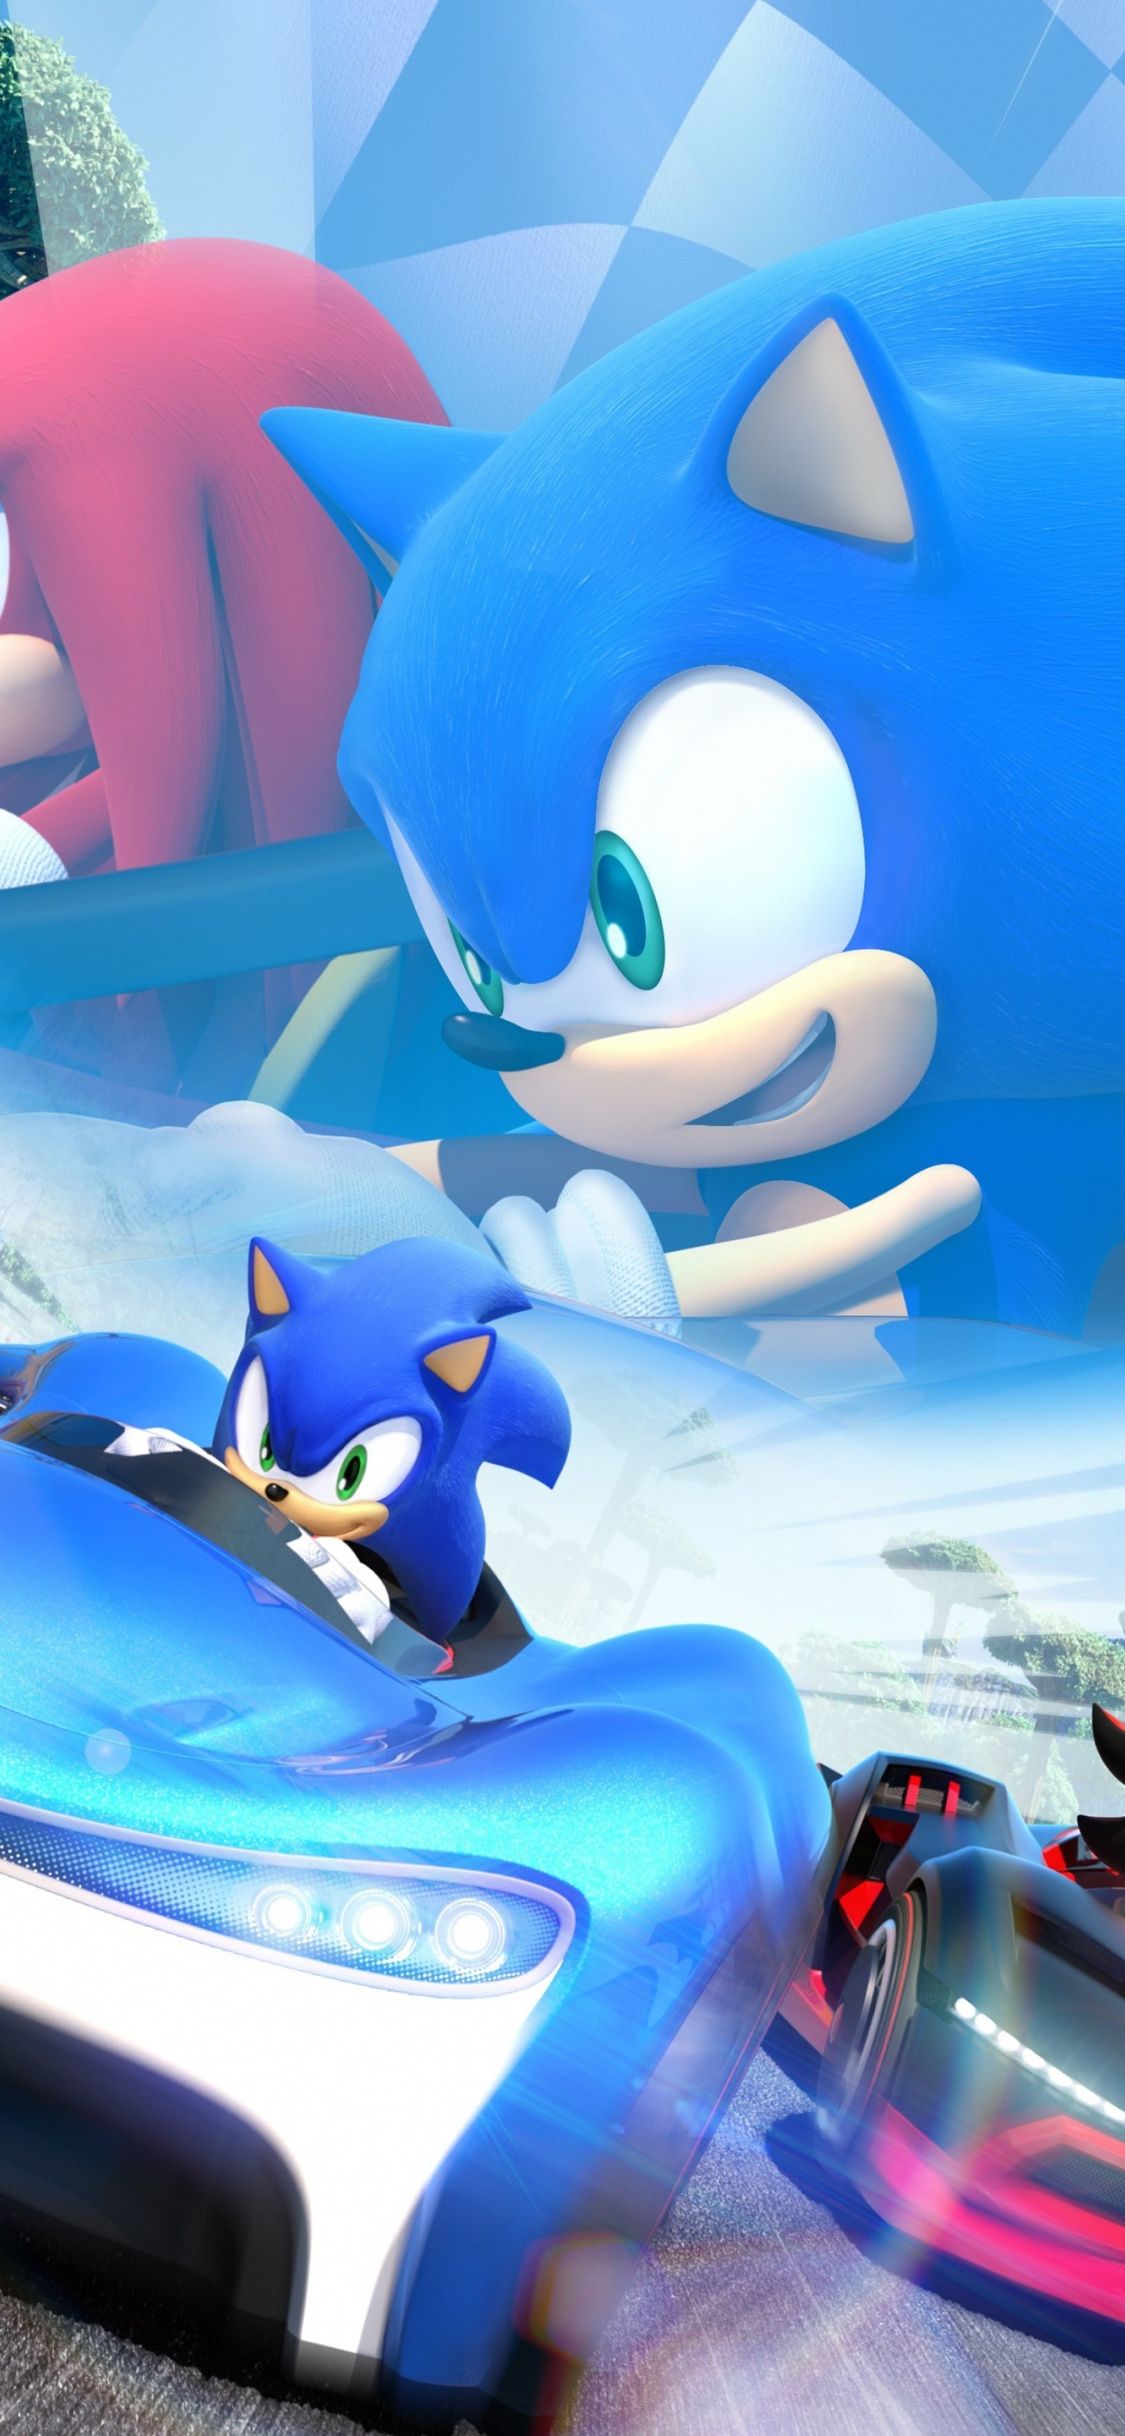 Sonic The Hedgehog, Video Game, Kart Racing Game, Nintendo,